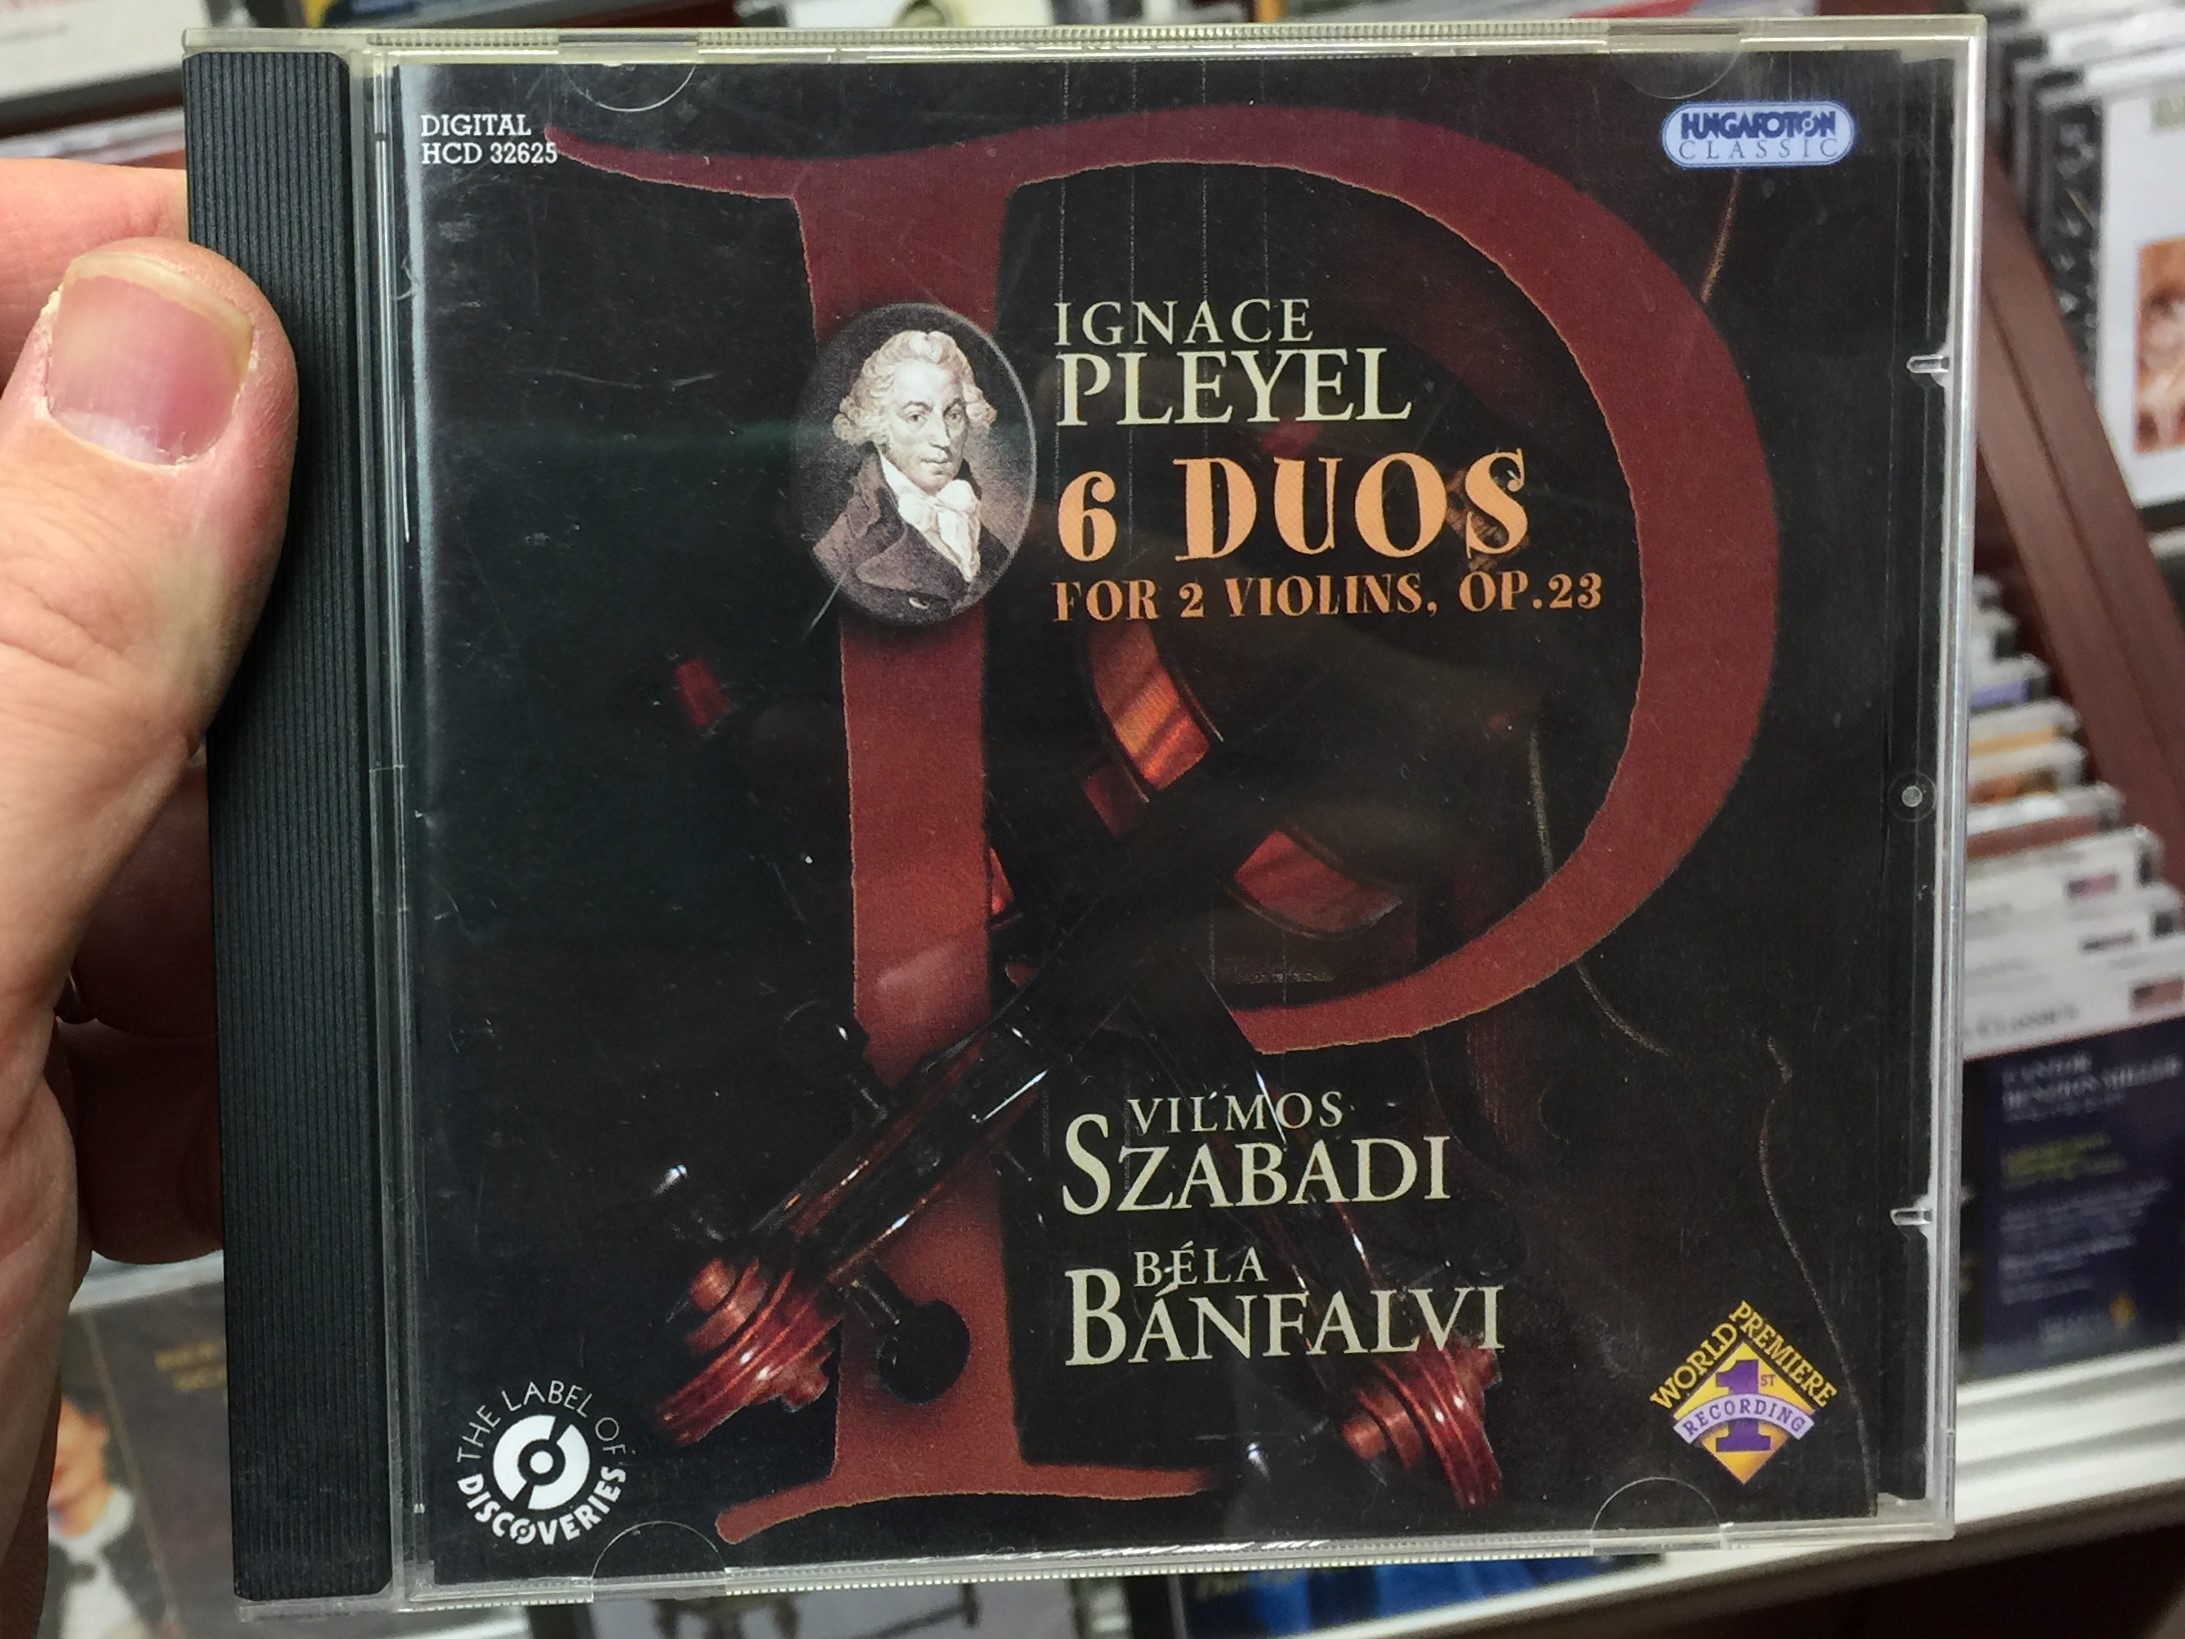 ignace-pleyel-6-duos-for-2-violins-op.23-vilmos-szabadi-b-la-b-nfalvi-hungaroton-classic-audio-cd-2010-stereo-hcd-32625-1-.jpg